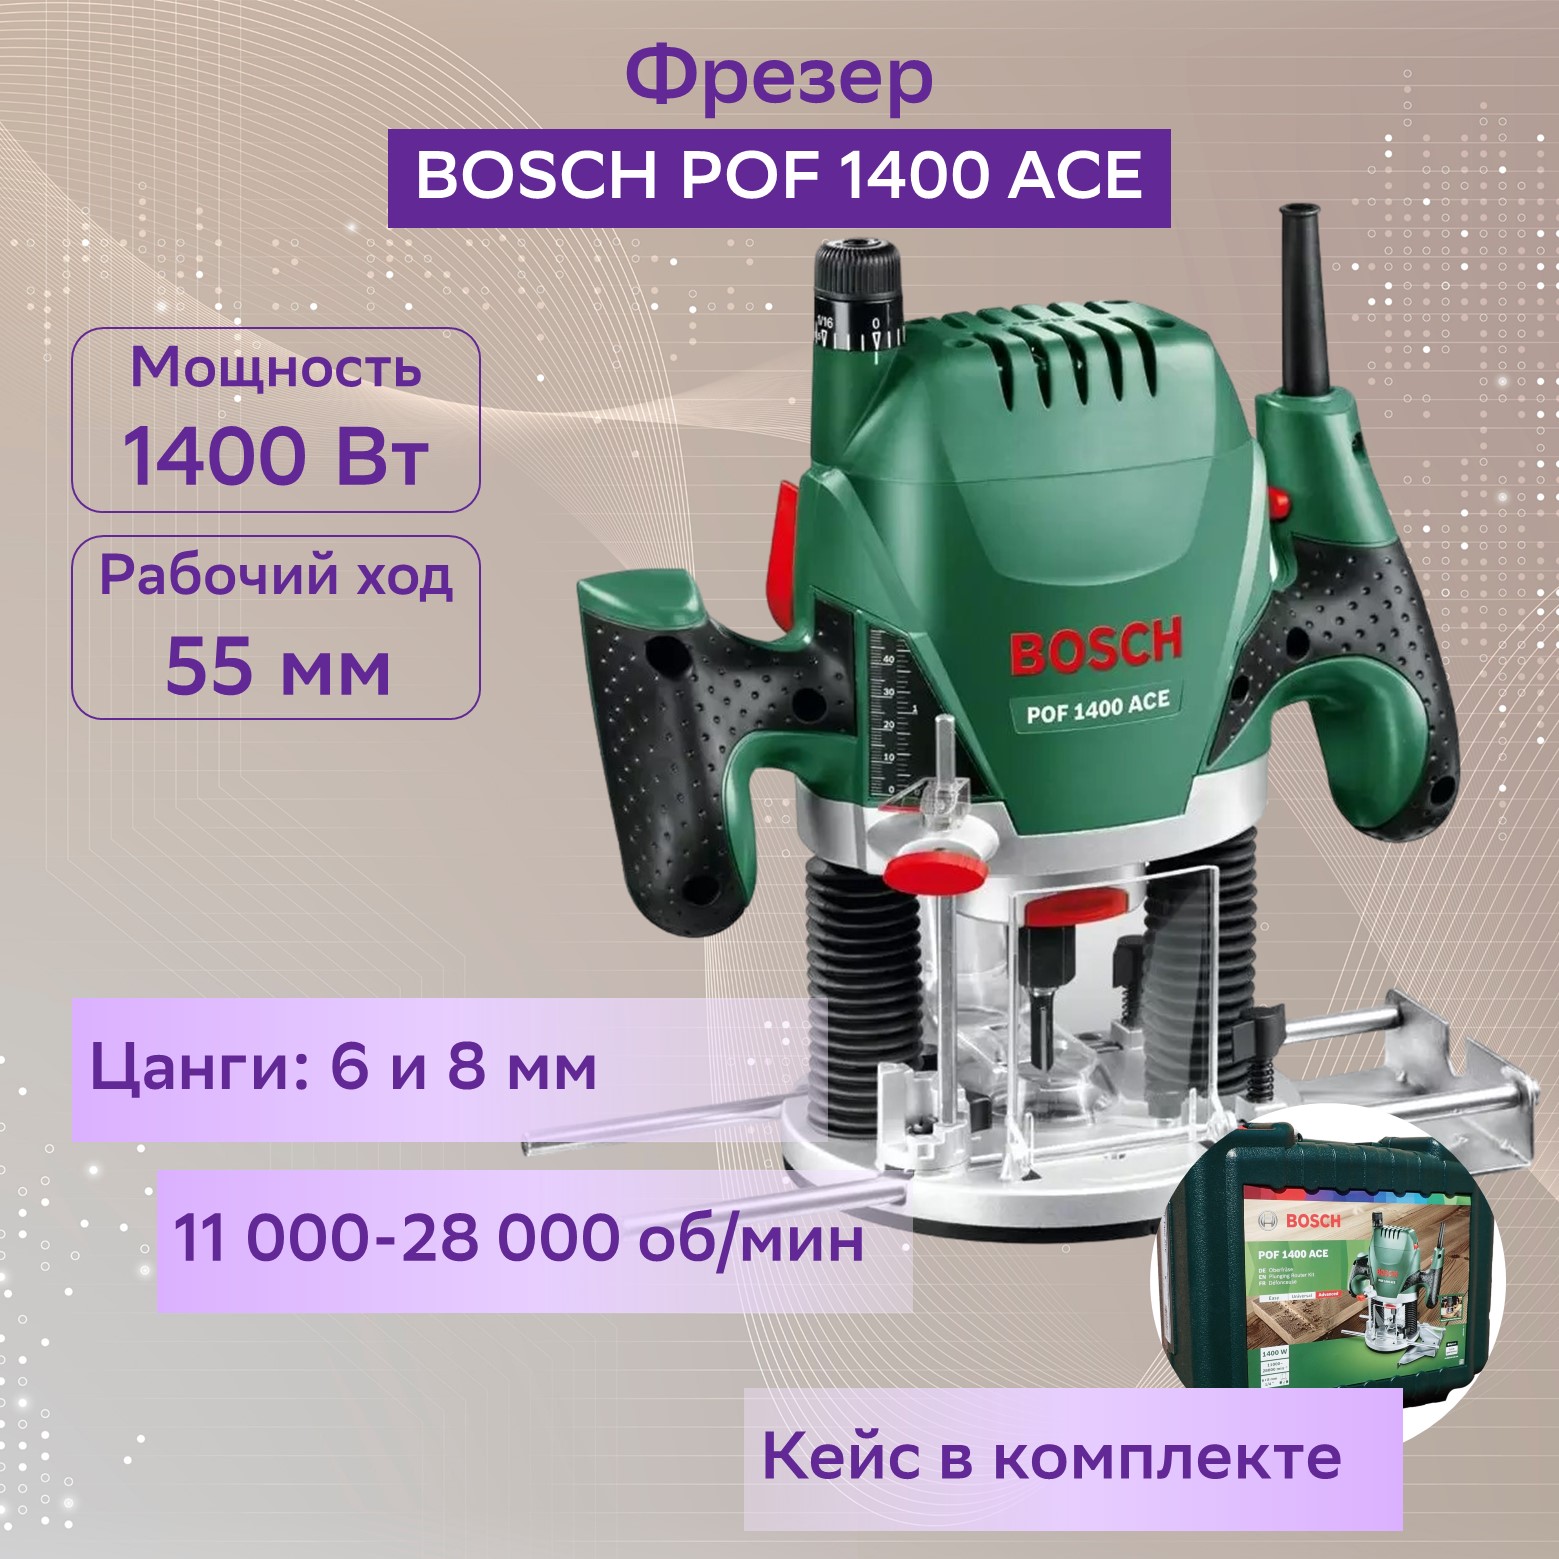 Фрезер бош 1400. Bosch POF 1400 Ace. POF 1400 Ace. Фрейзер бош 1400 профи. Бош 1400 купить